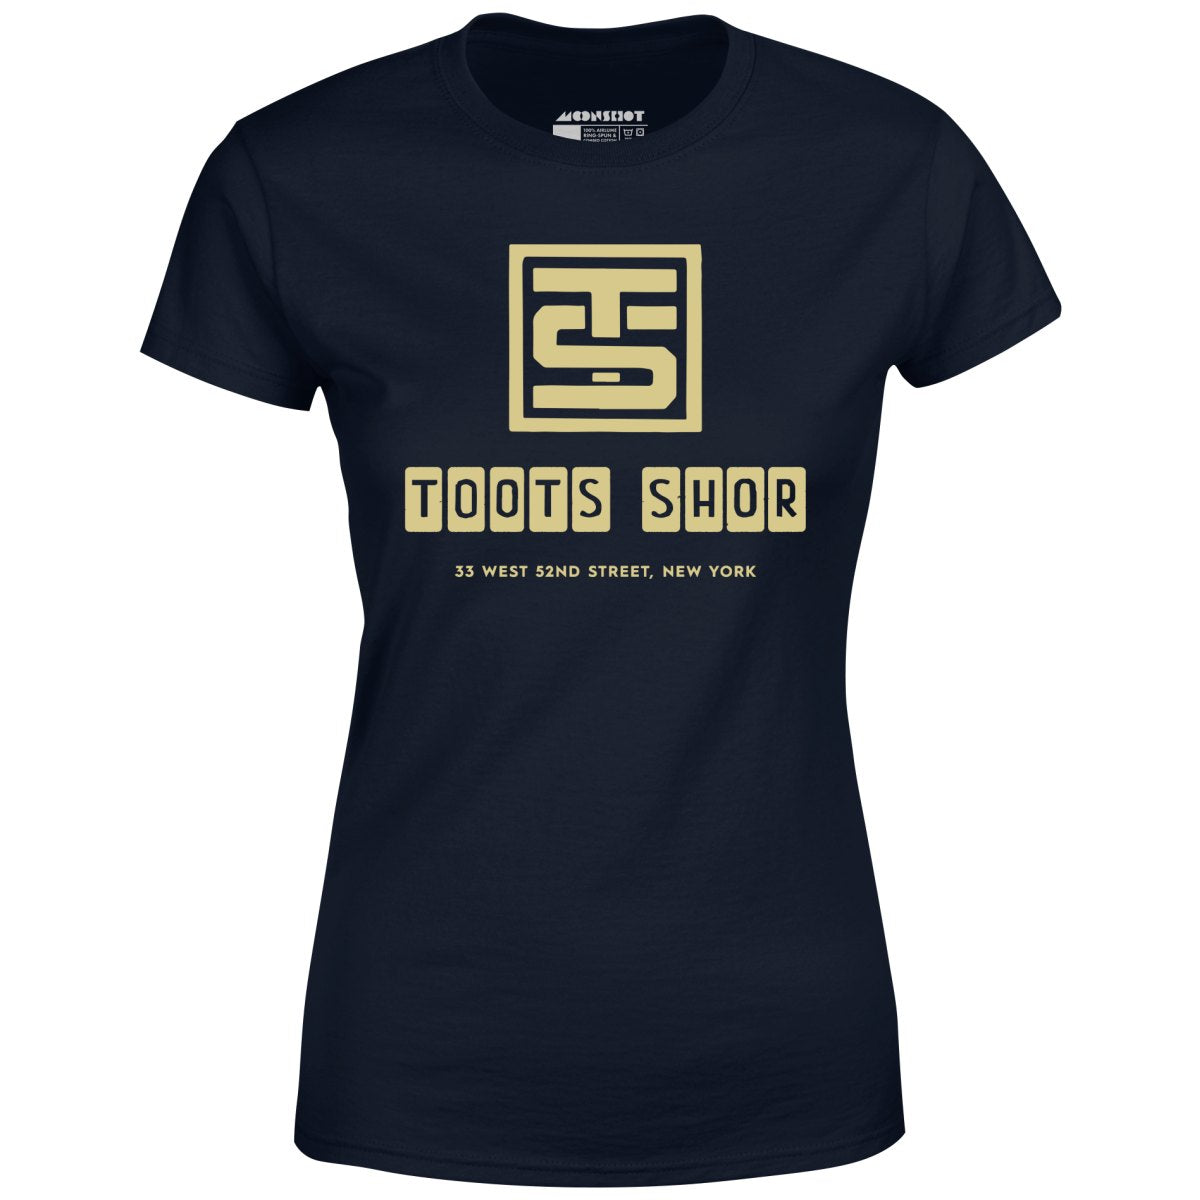 Toots Shor Logo - Manhattan, NY - Vintage Restaurant - Women's T-Shirt